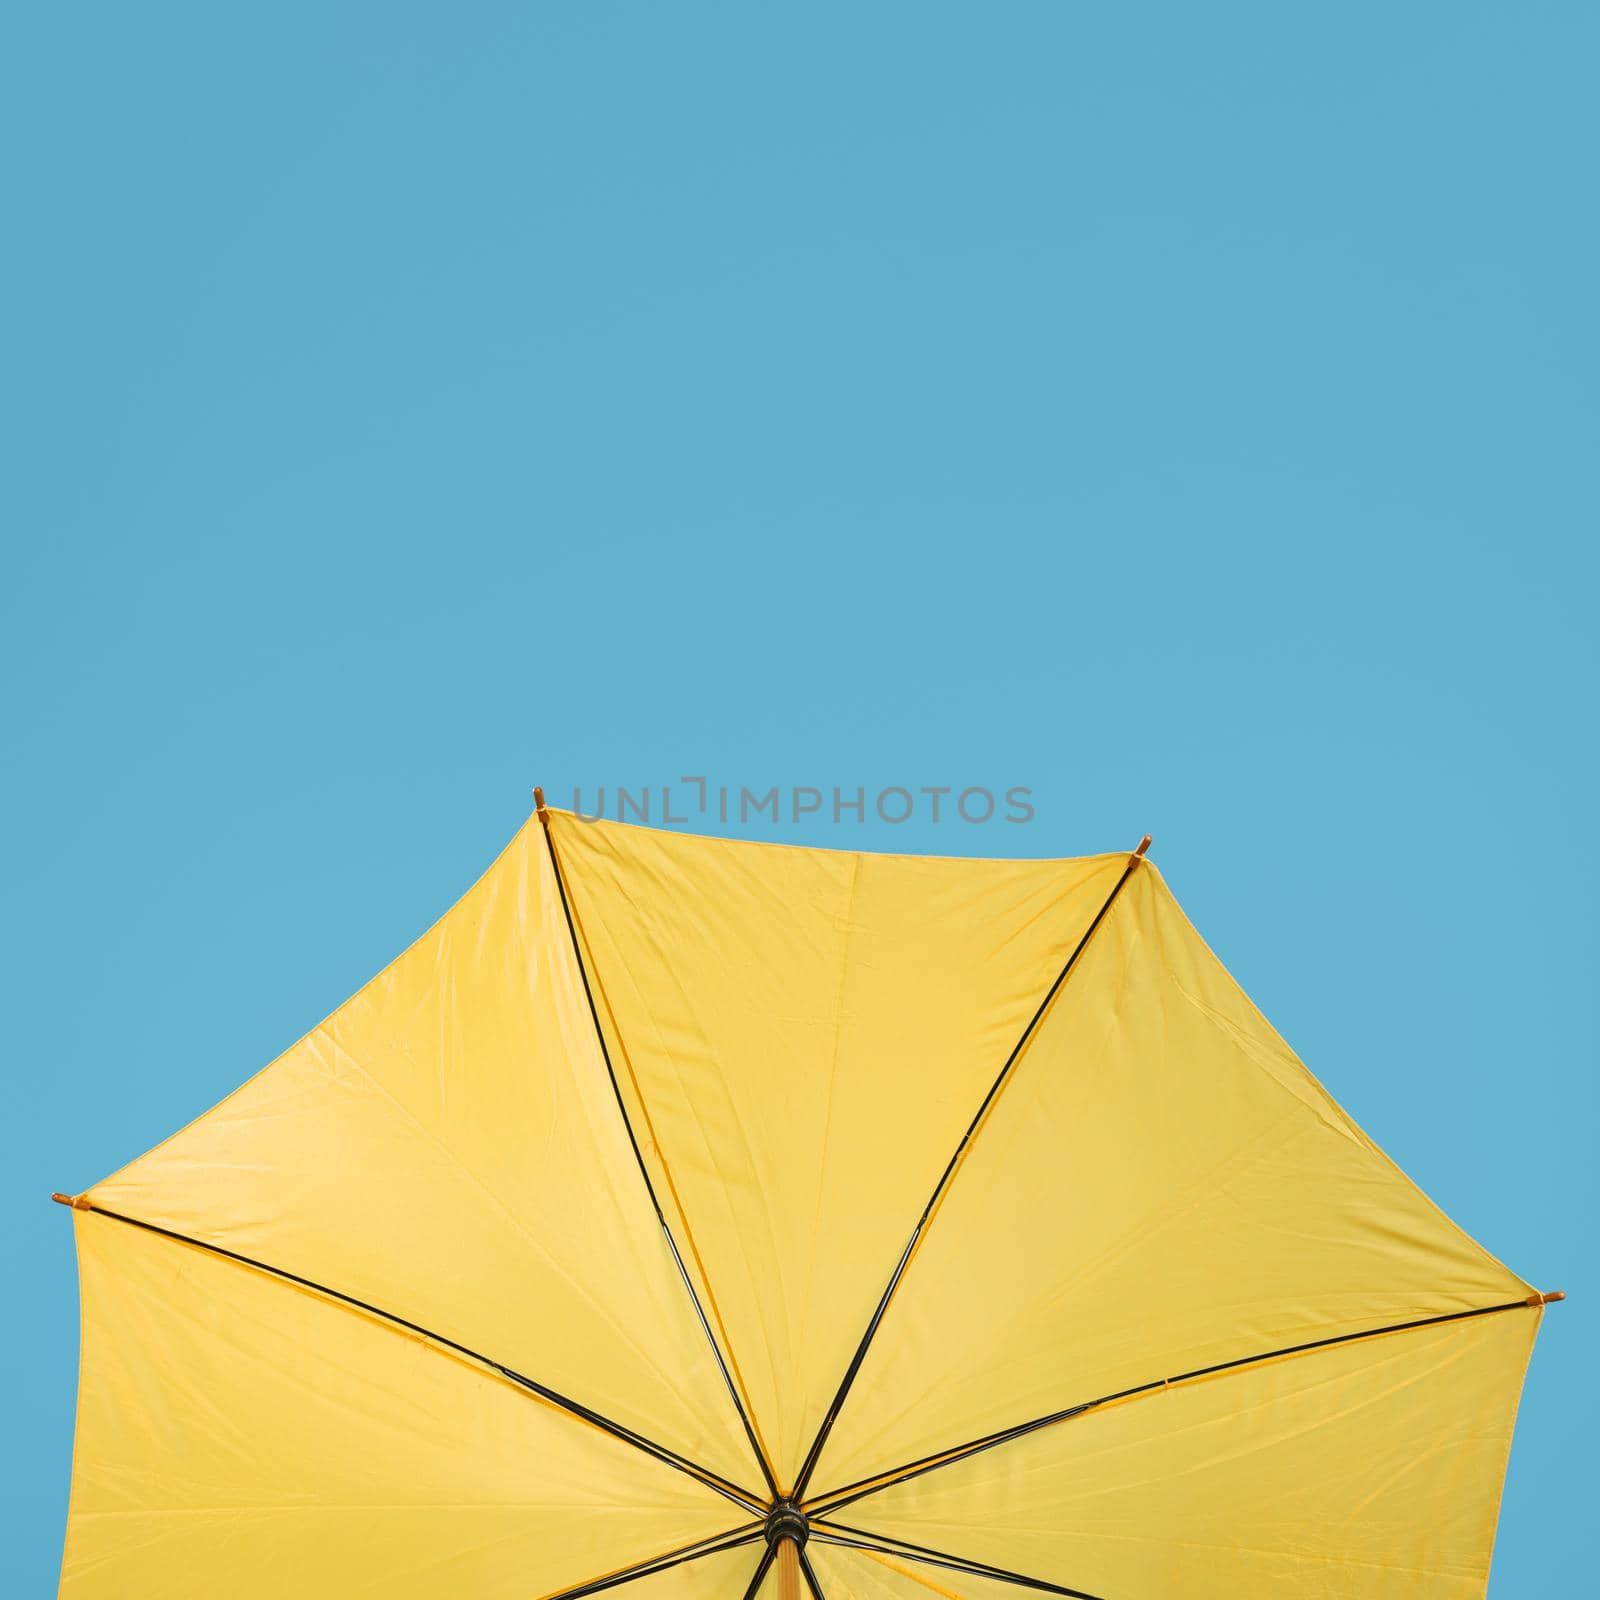 copy space yellow umbrella by Zahard